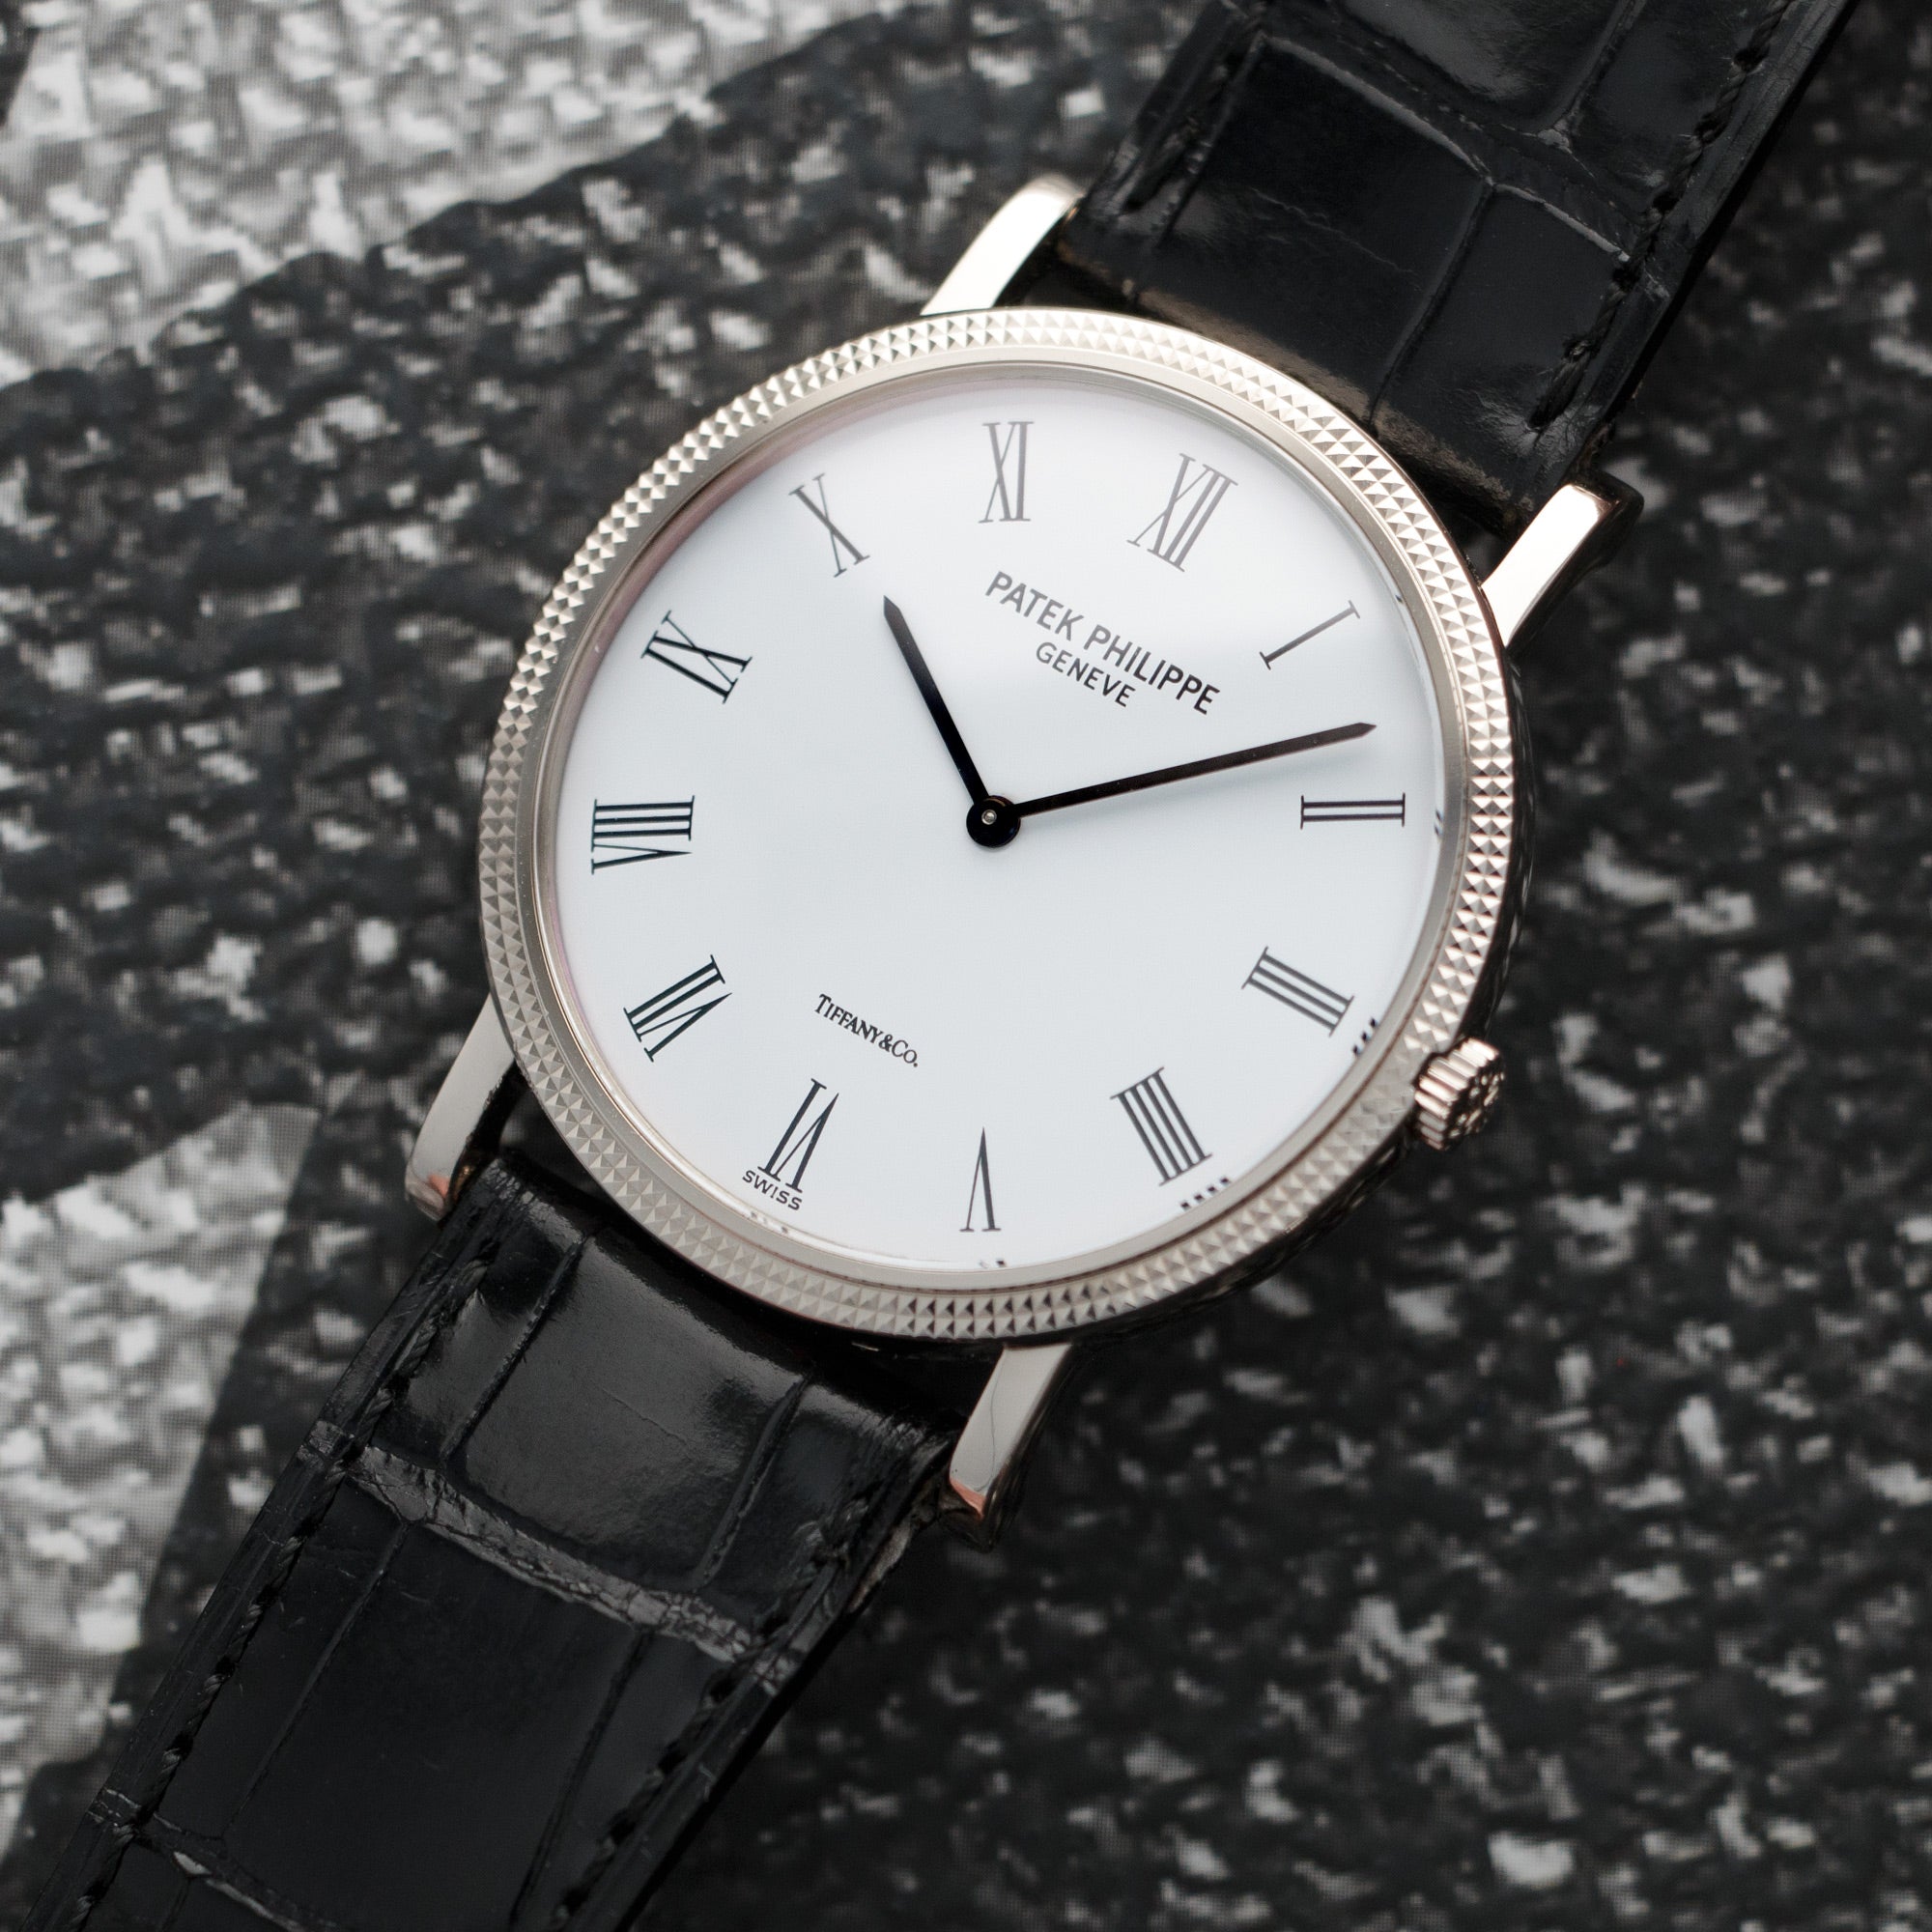 Patek Philippe - Patek Philippe White Gold Calatrava Watch, Ref. 3520 Retailed by Tiffany & Co. - The Keystone Watches